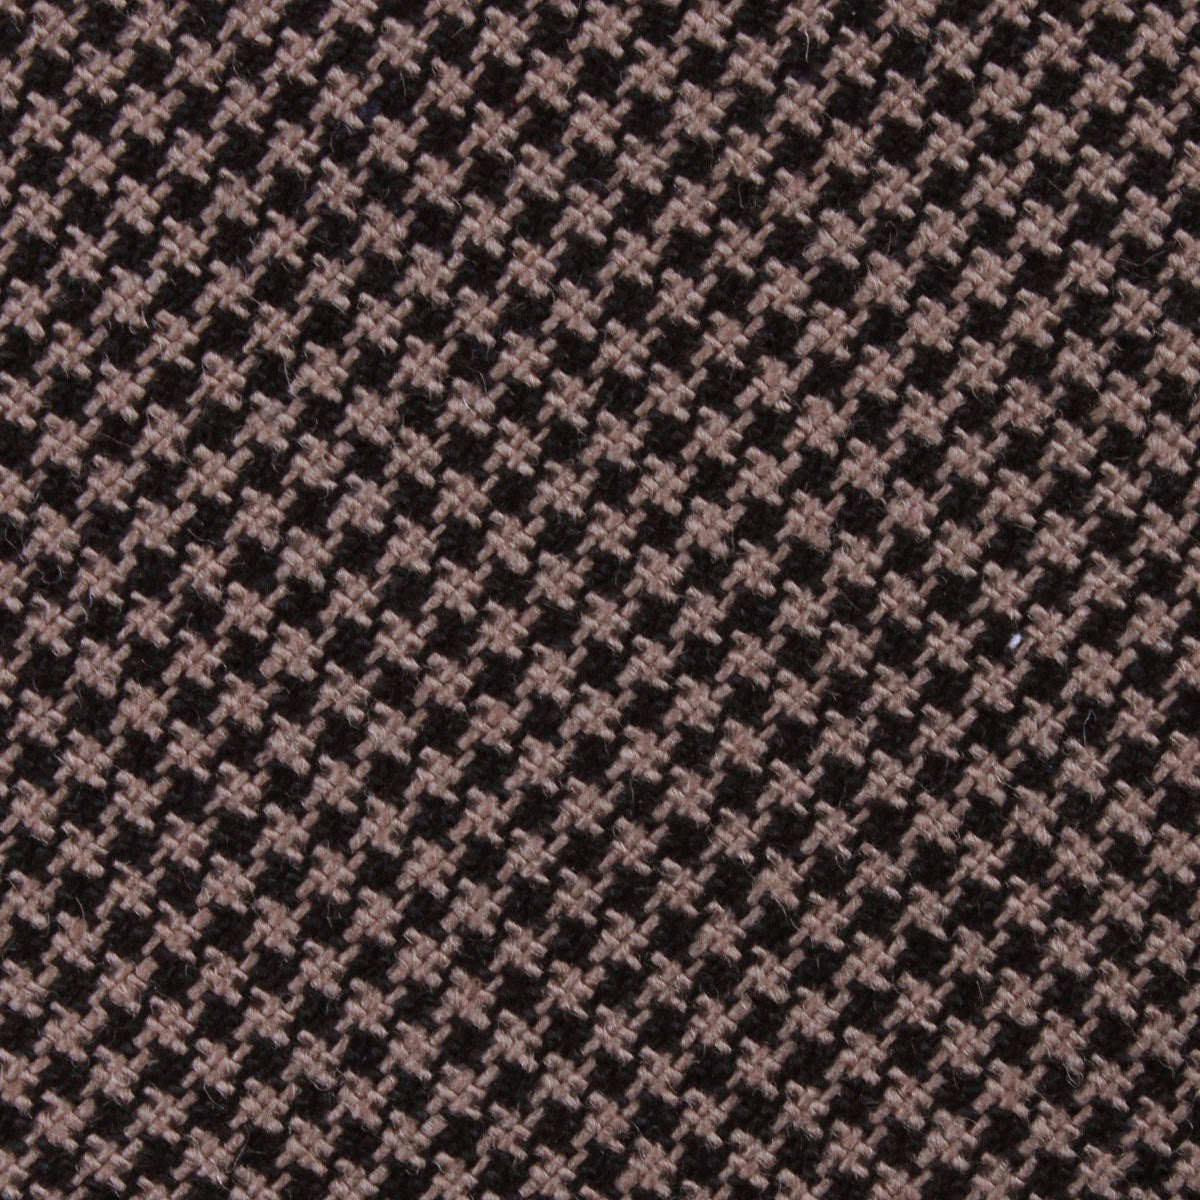 Madrid Brown Houndstooth Fabric Skinny Tie